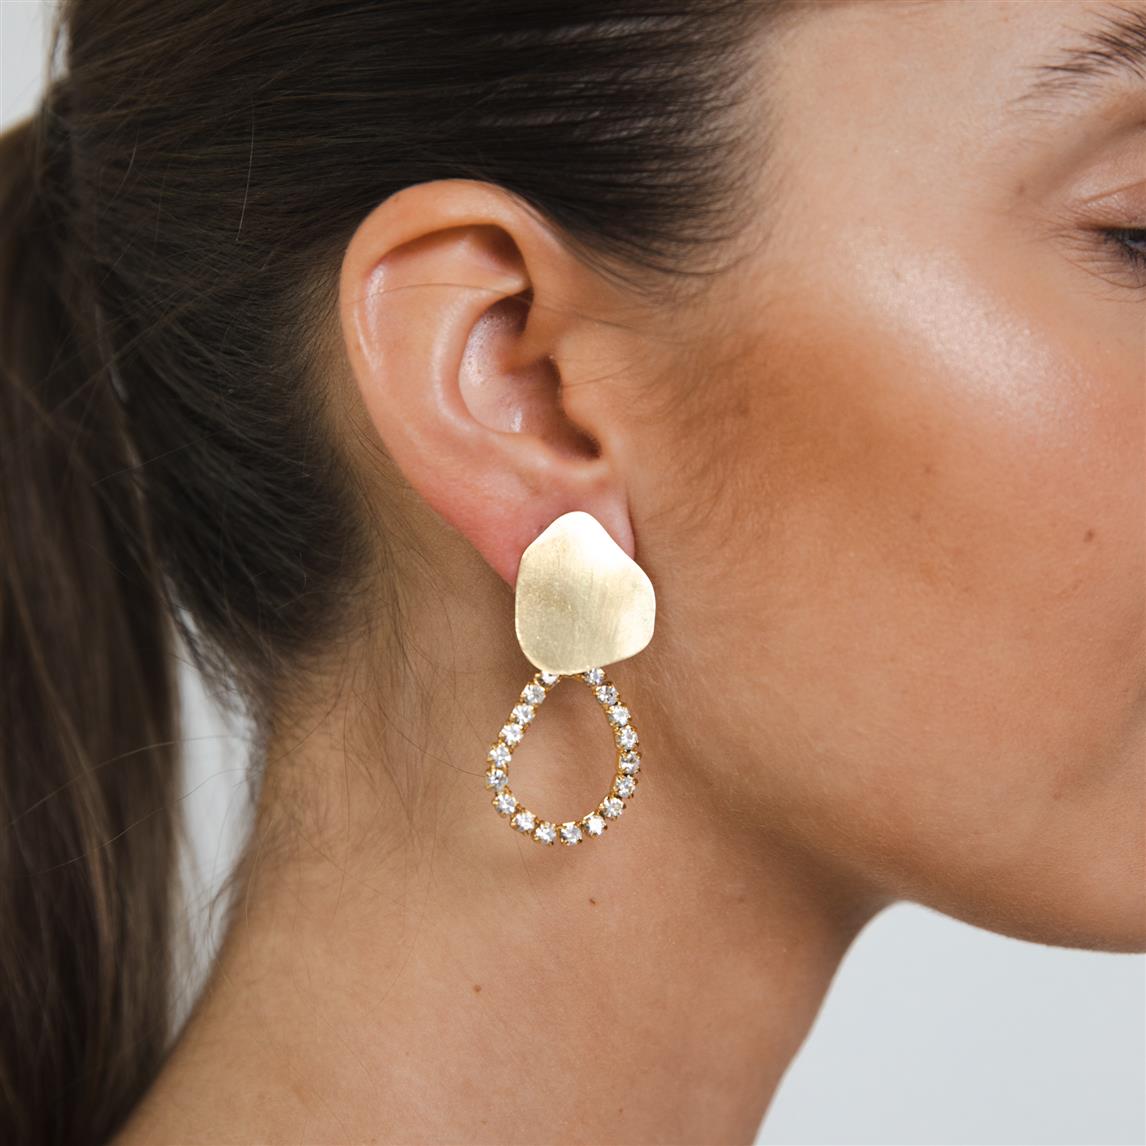 Giri small white strass earrings